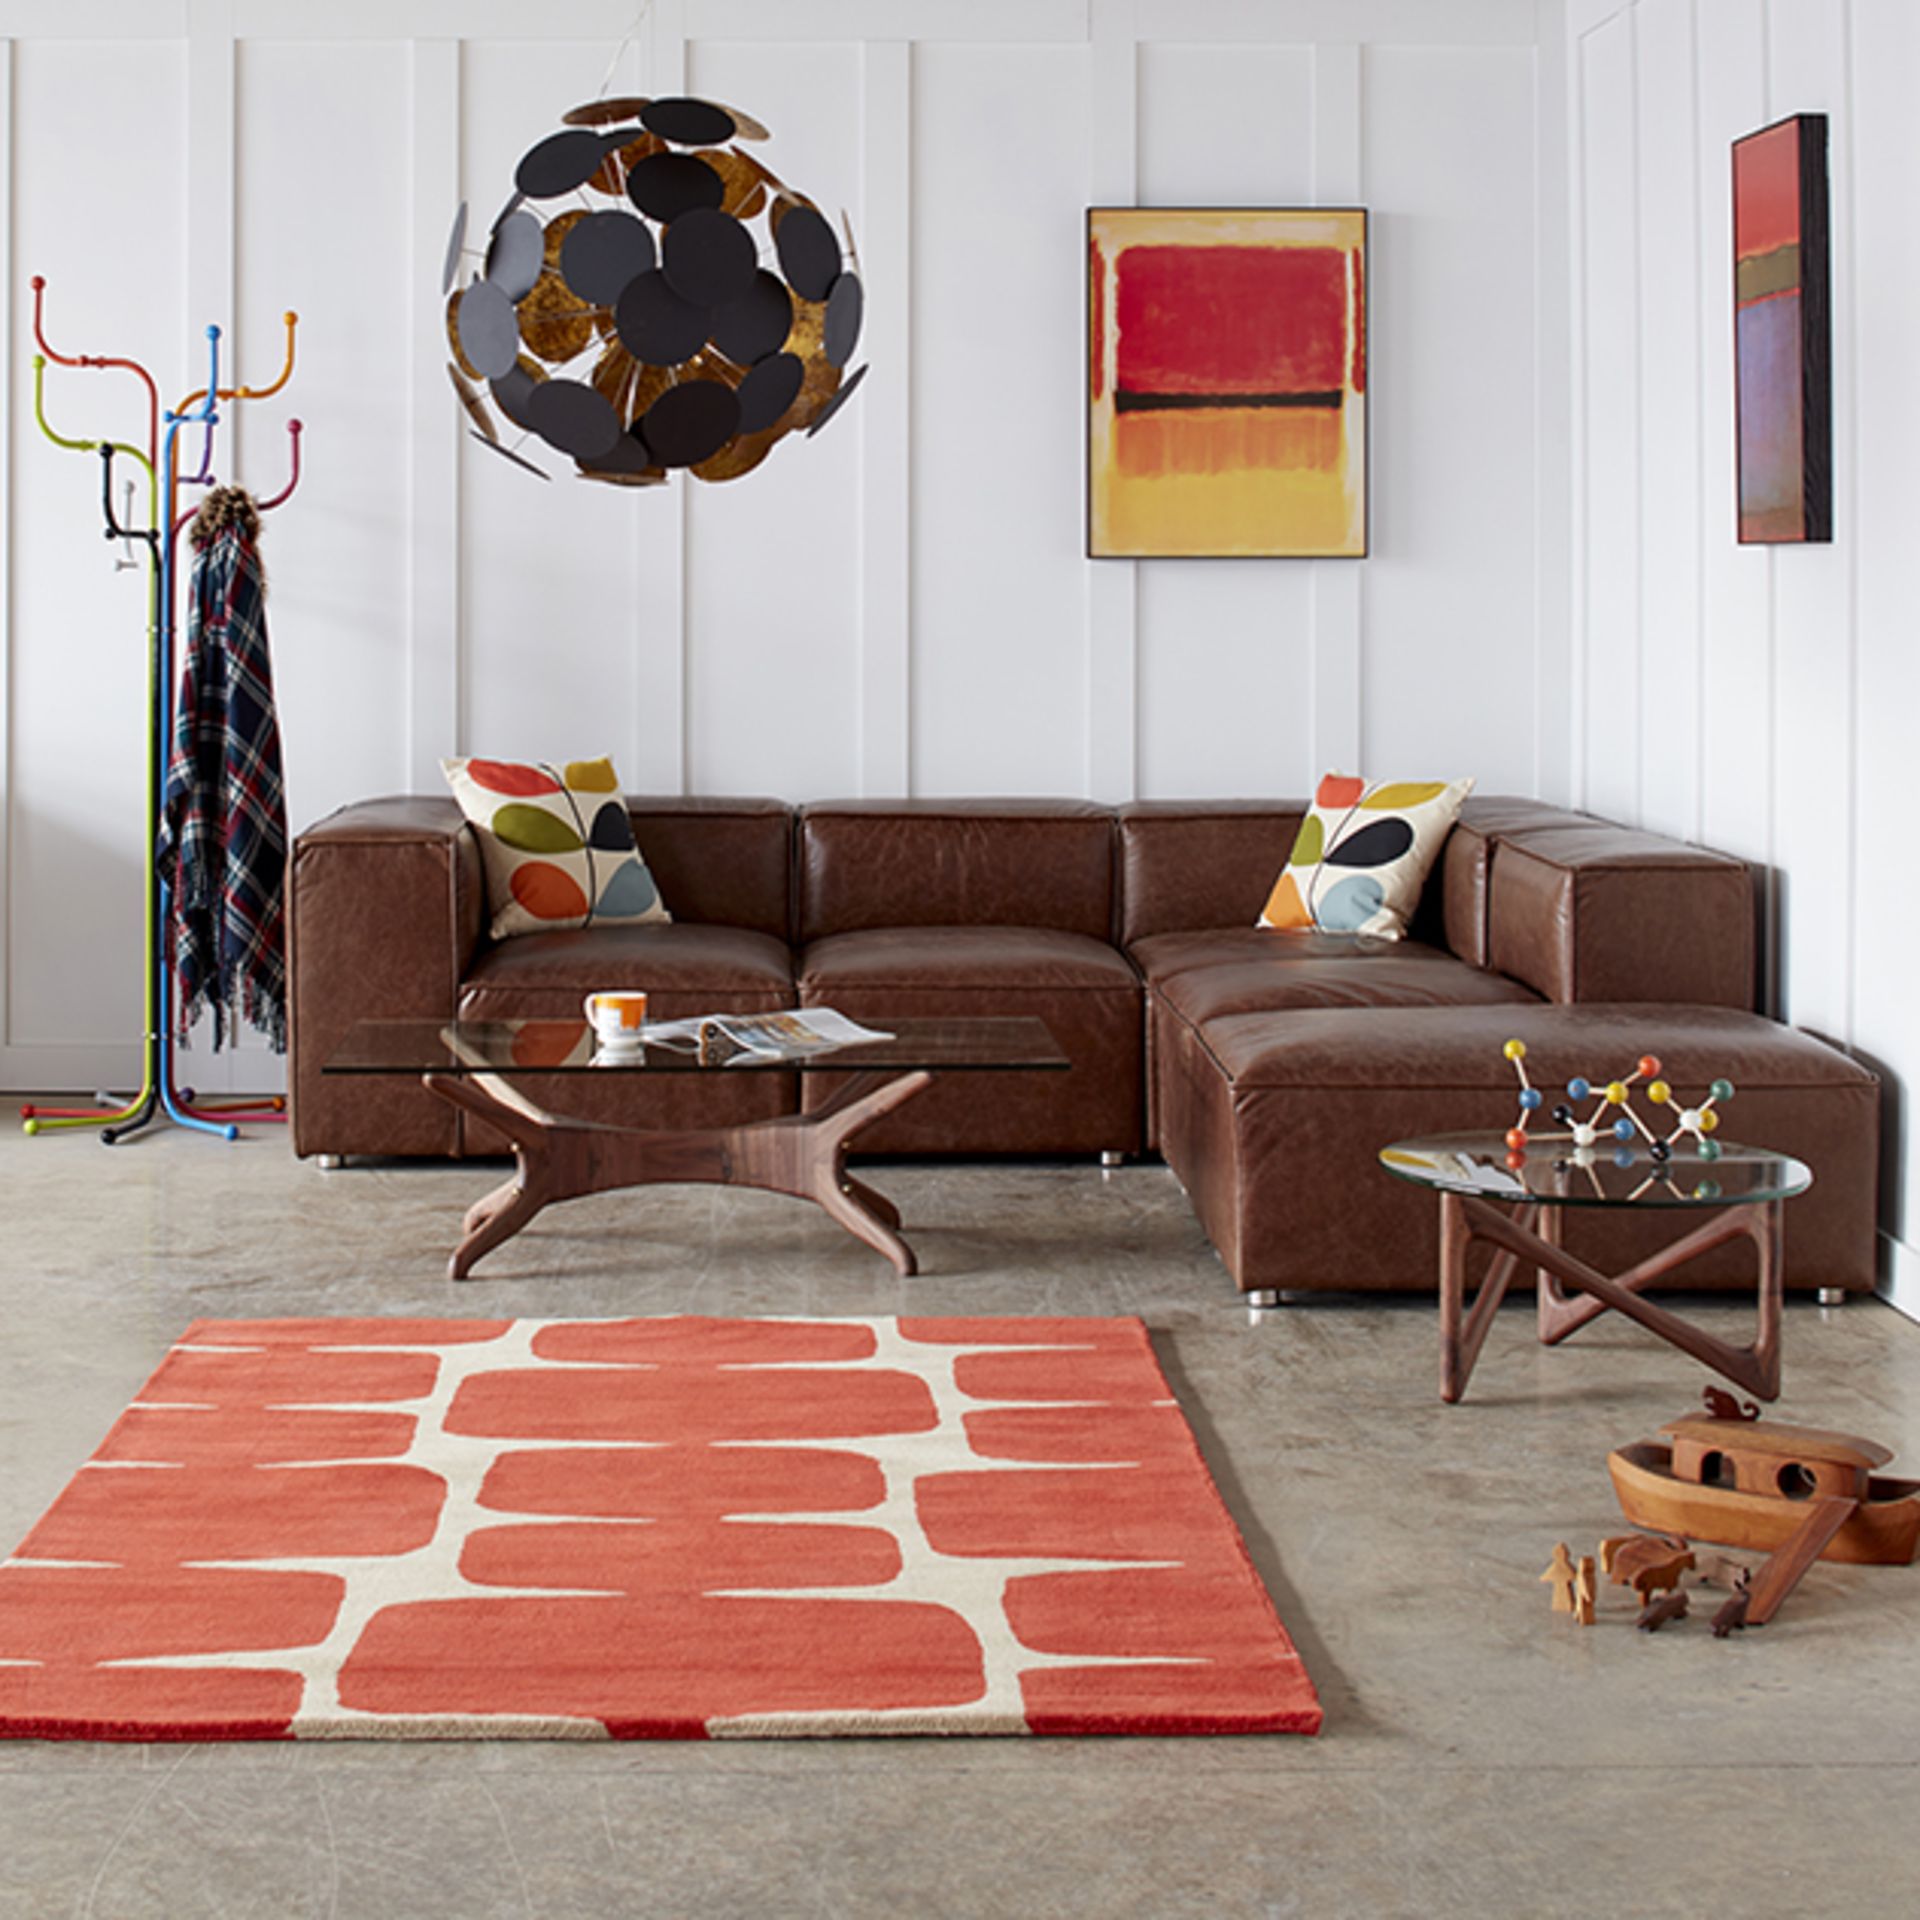 1 x Scion Lohko Poppy Designer Handmade Carpet Rug - Made From 100% Wool Yarn - 140 x 200 cms - Image 2 of 6